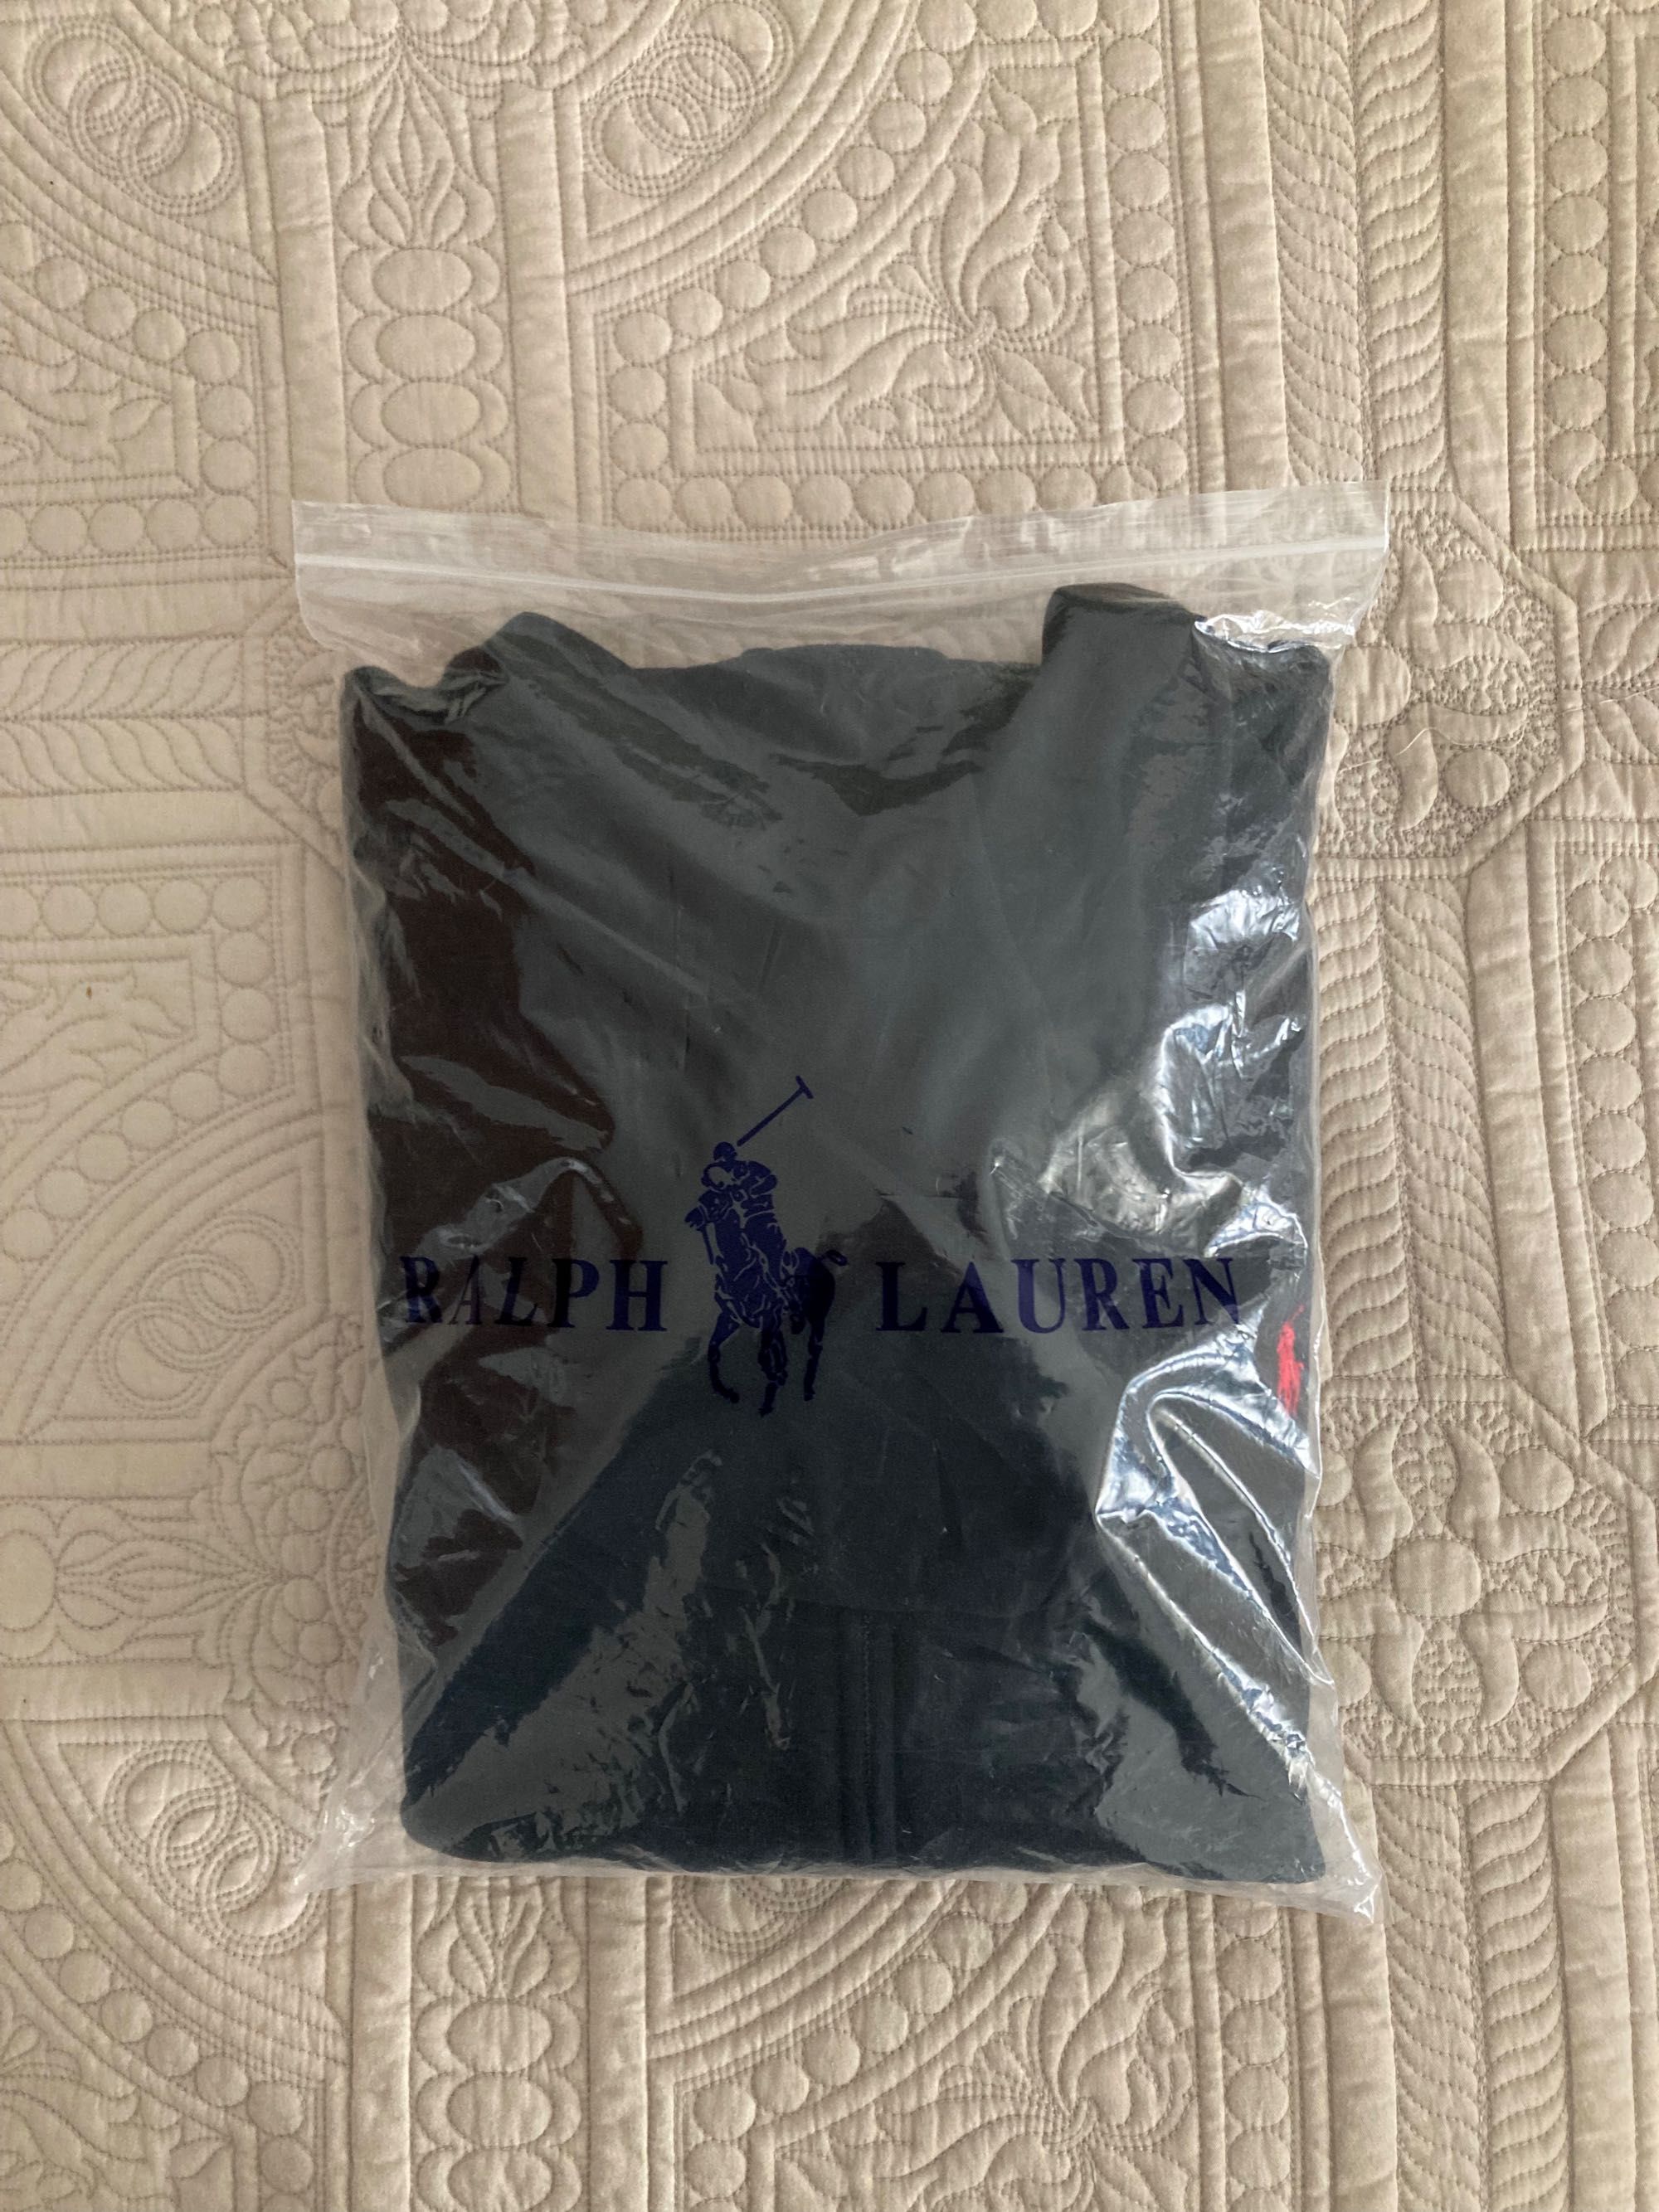 Polo Ralph Lauren // Black Sweat Shirt Hoodie - Size M